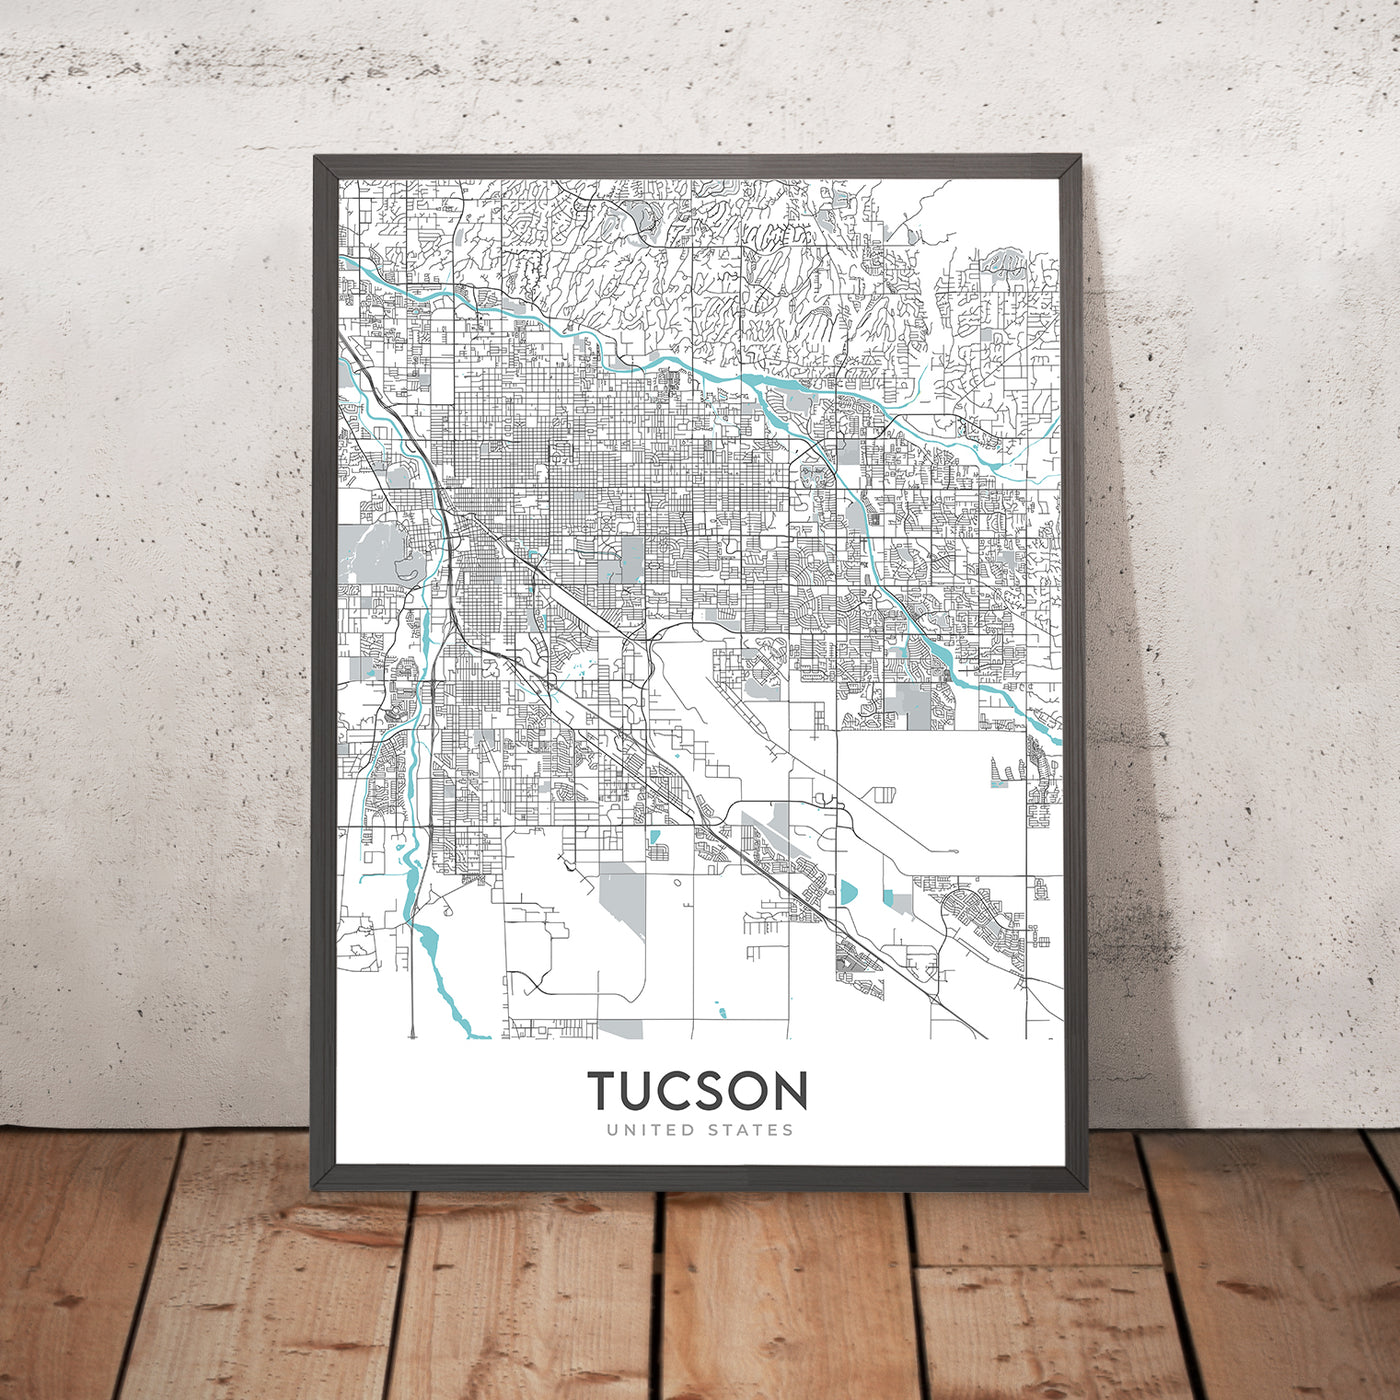 Plan de la ville moderne de Tucson, Arizona : Univ of Arizona, Pima Air & Space Museum, Saguaro NP, Sabino Canyon, Mount Lemmon